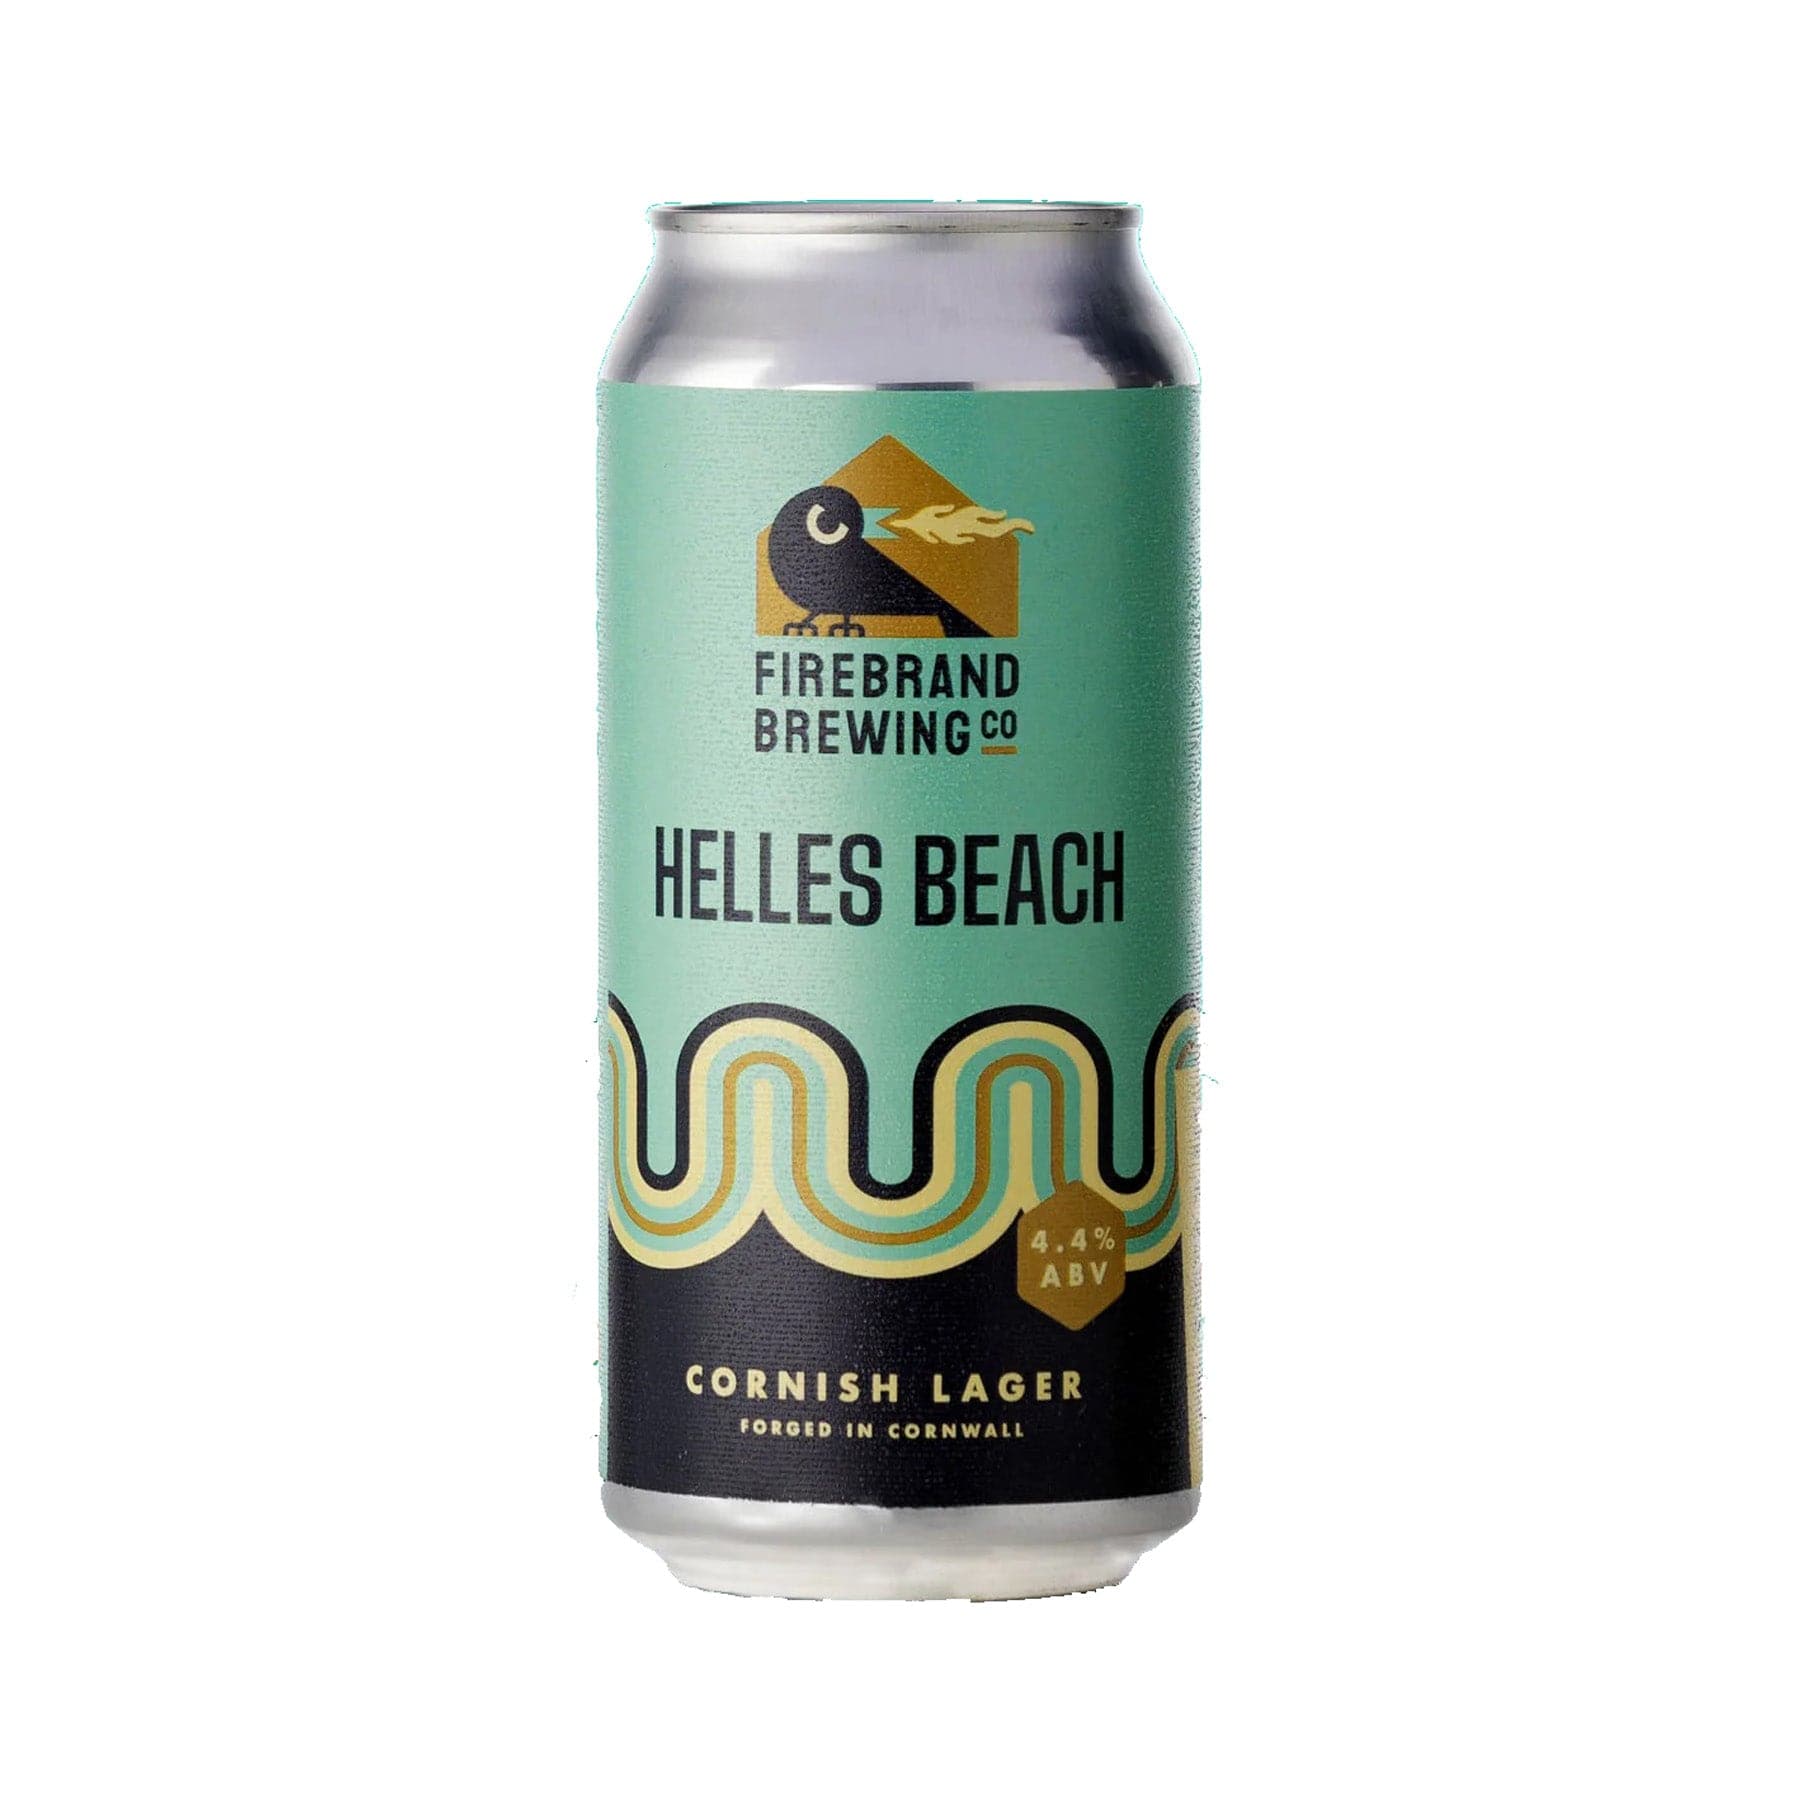 Helles beach cornish lager 440ml